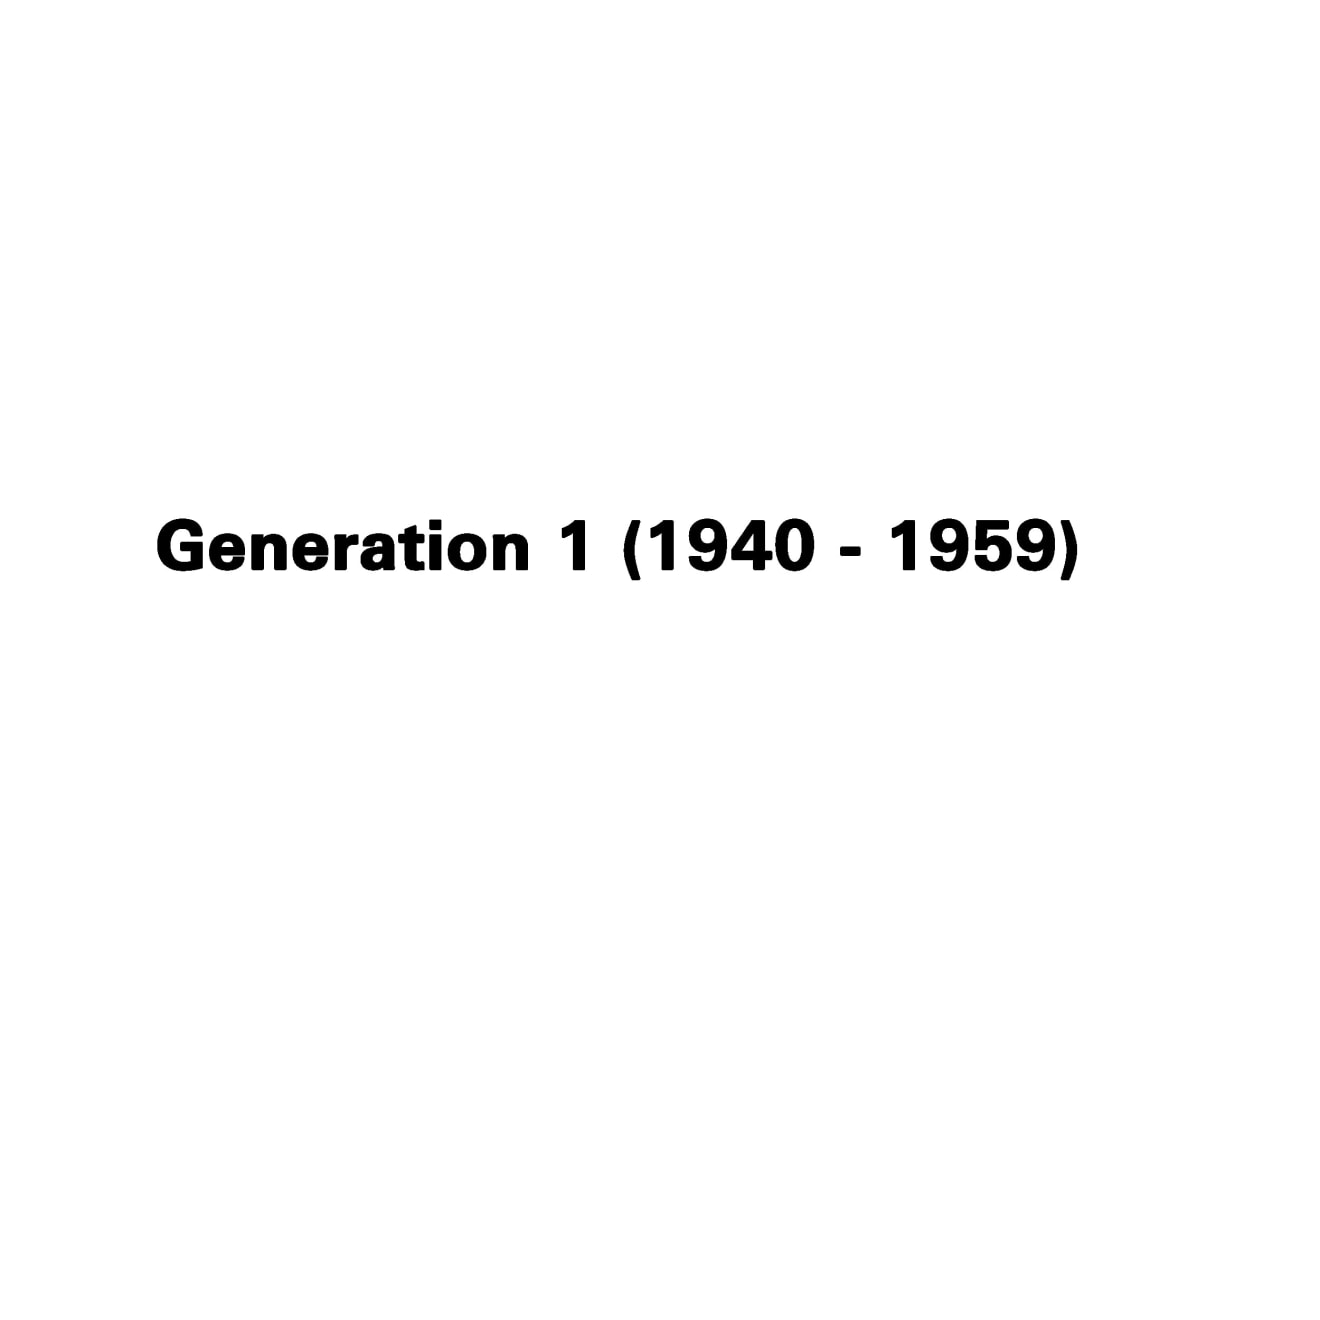 Generation 1 (1940 - 1959)